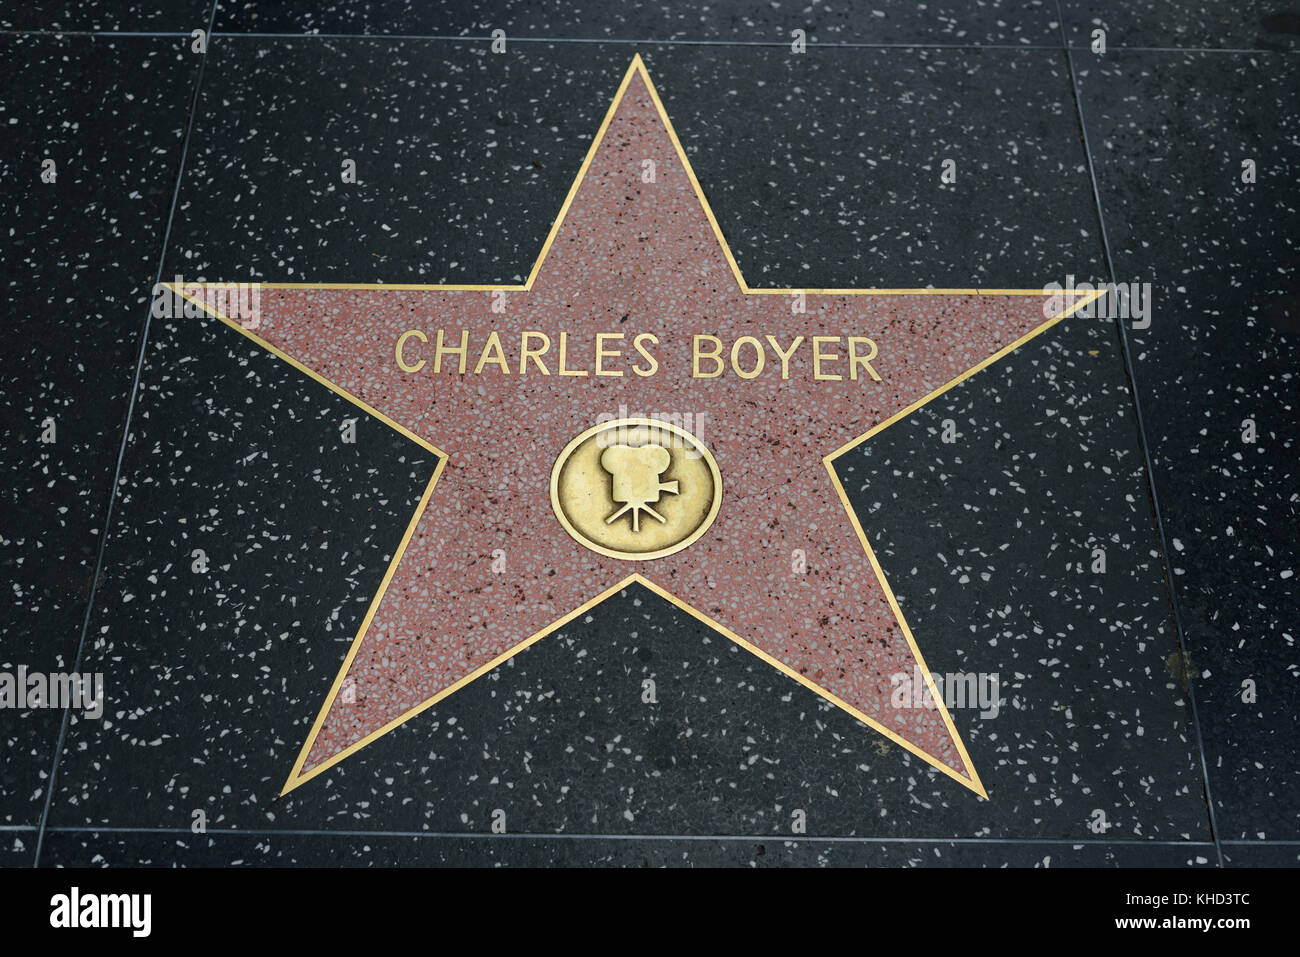 HOLLYWOOD, CA - DICEMBRE 06: Charles Boyer stella sulla Hollywood Walk of Fame a Hollywood, California il 6 dicembre 2016. Foto Stock